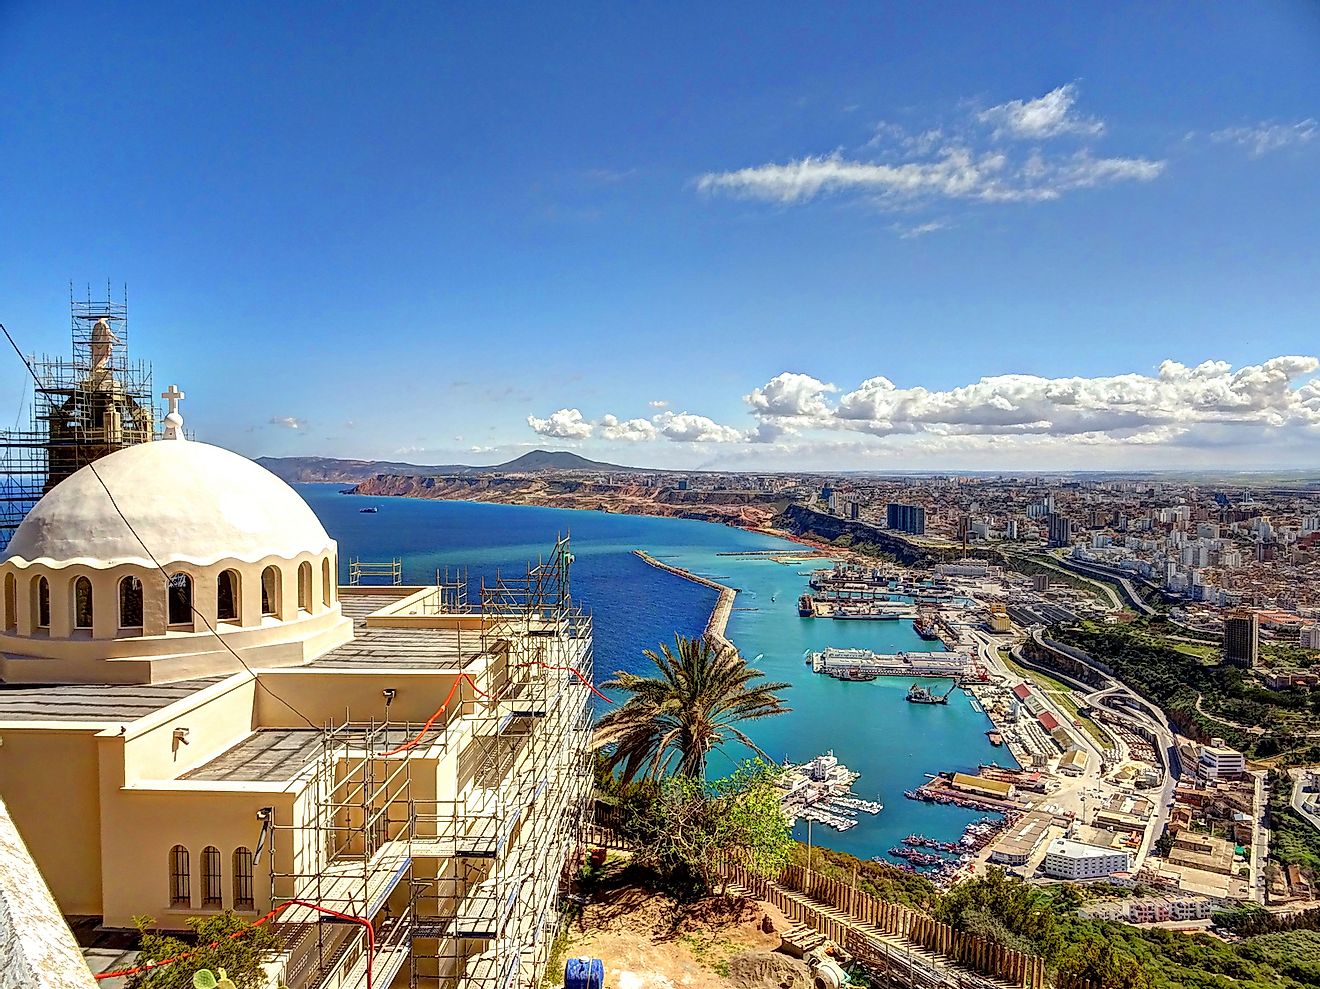 Oran, Algeria. Image credit: Mehdi33300/Shutterstock.com